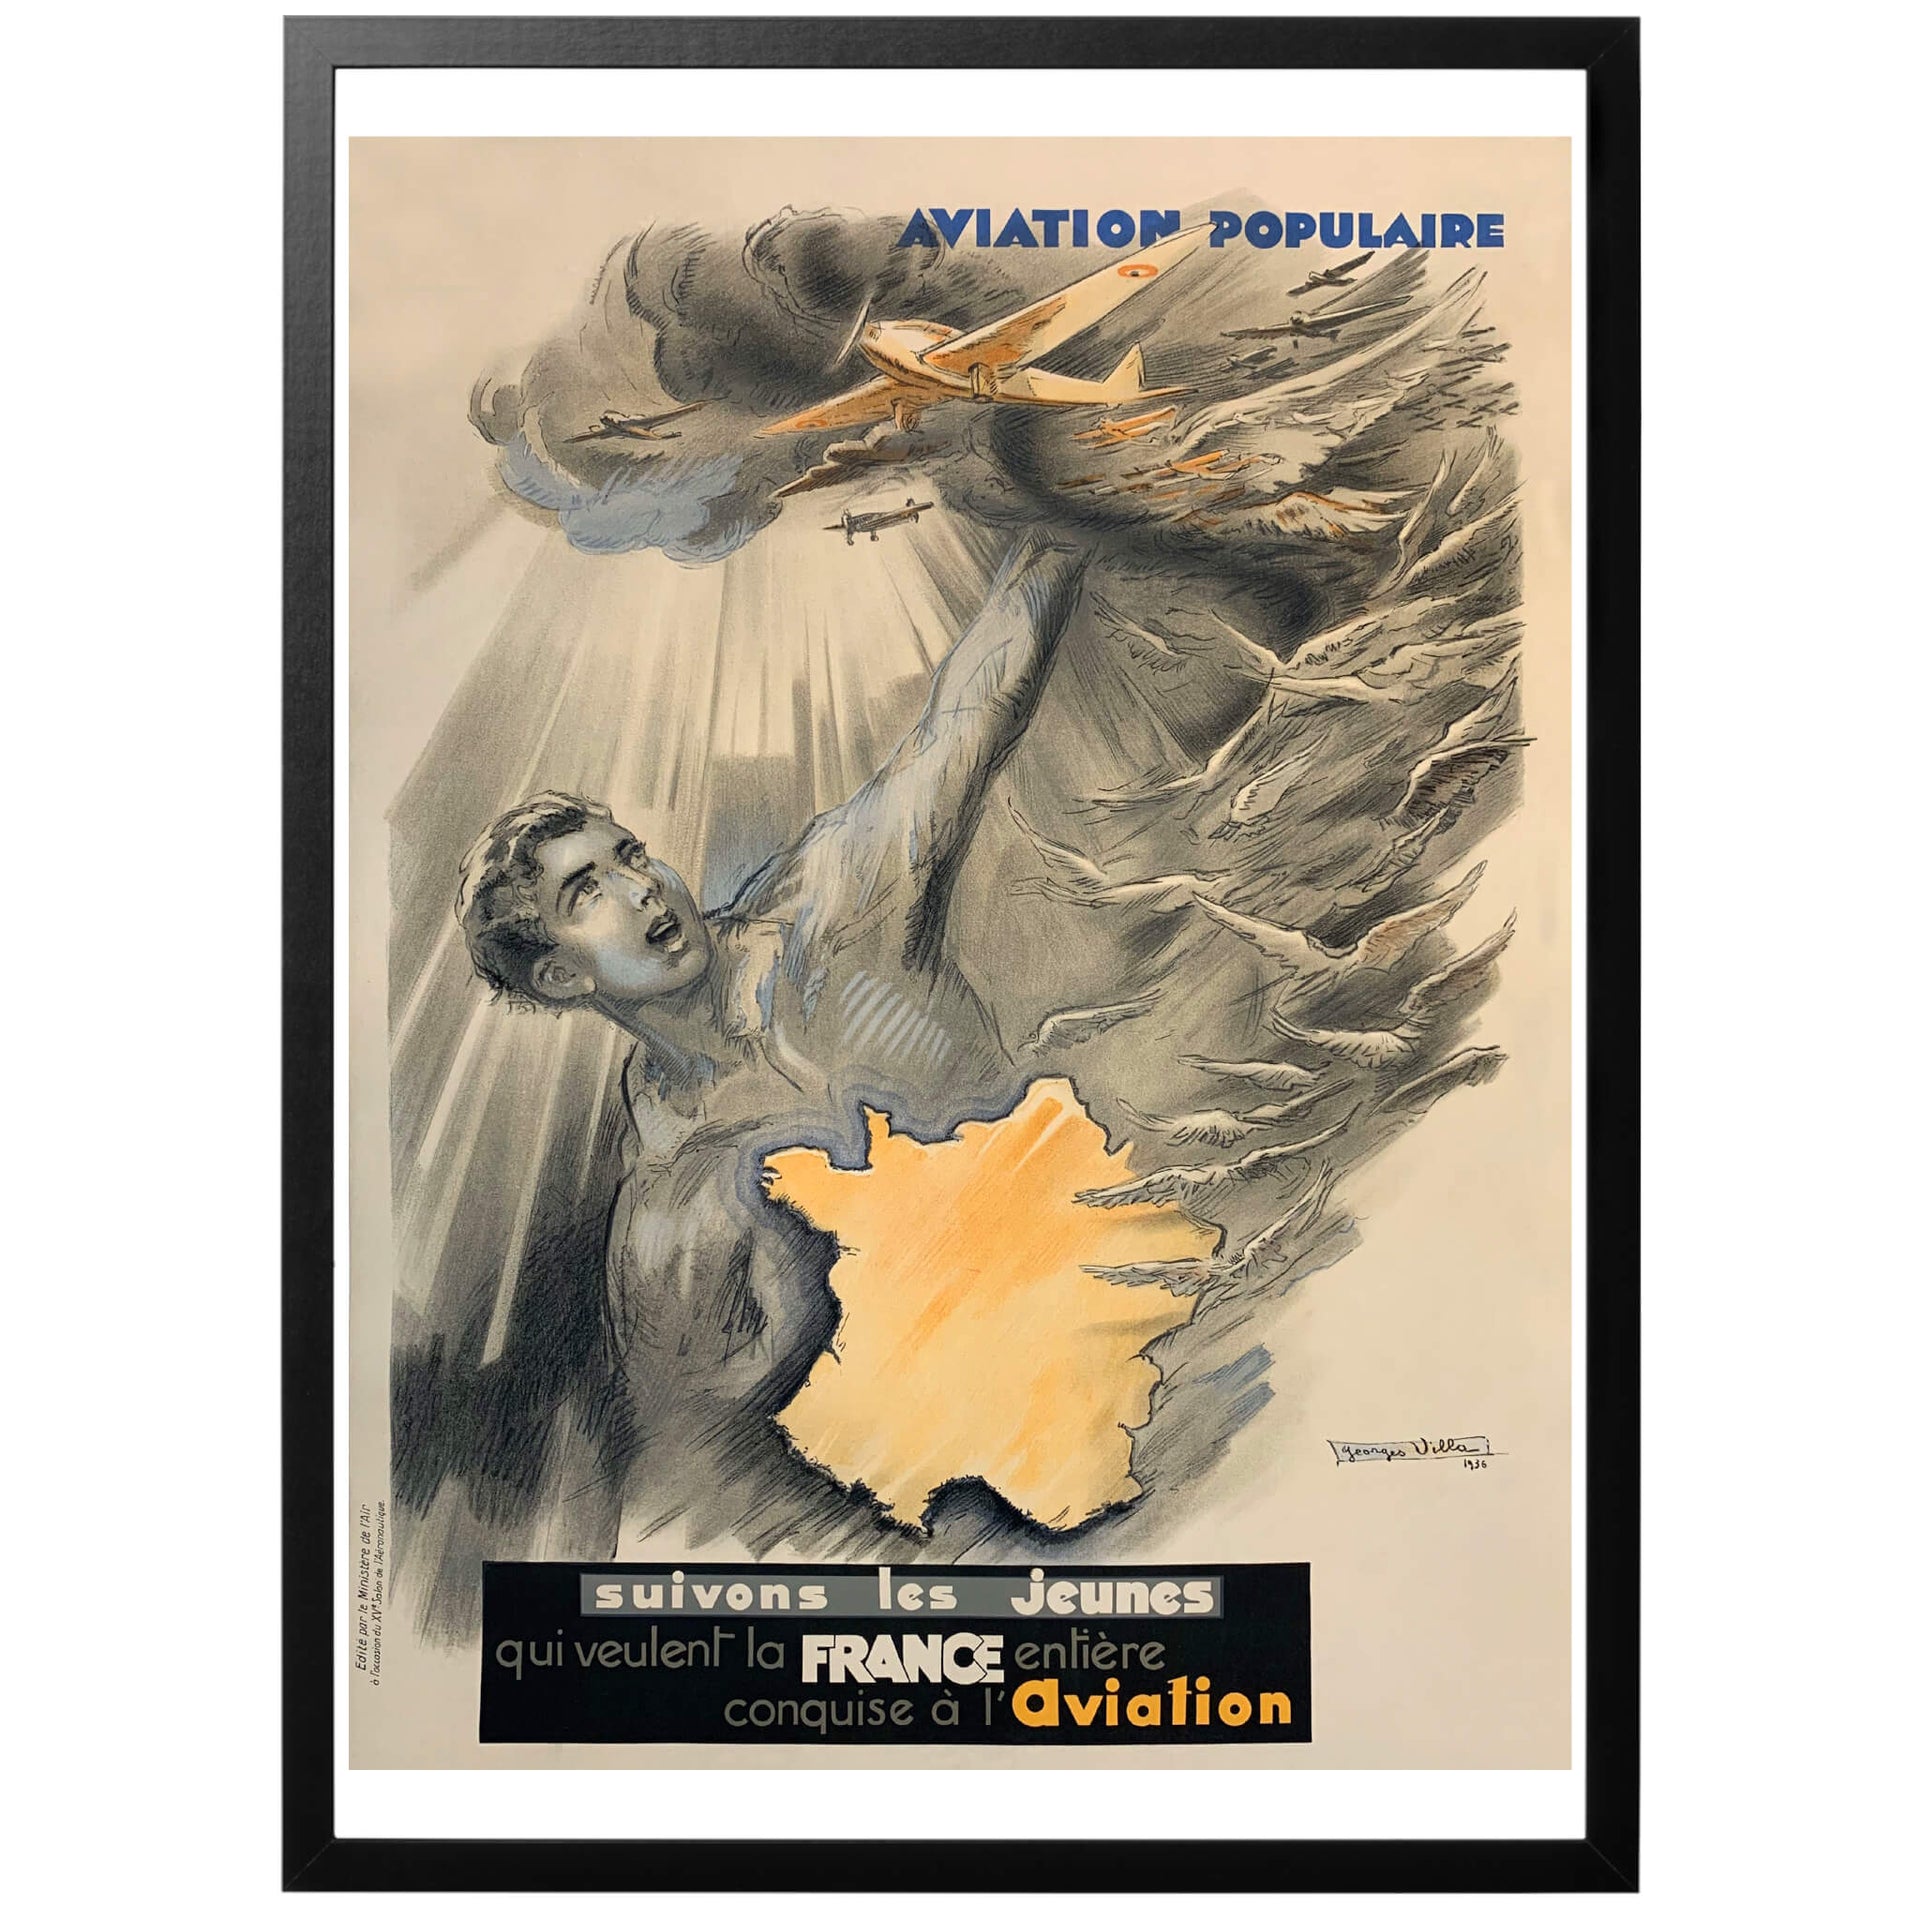 Aviation populaire - fransk poster